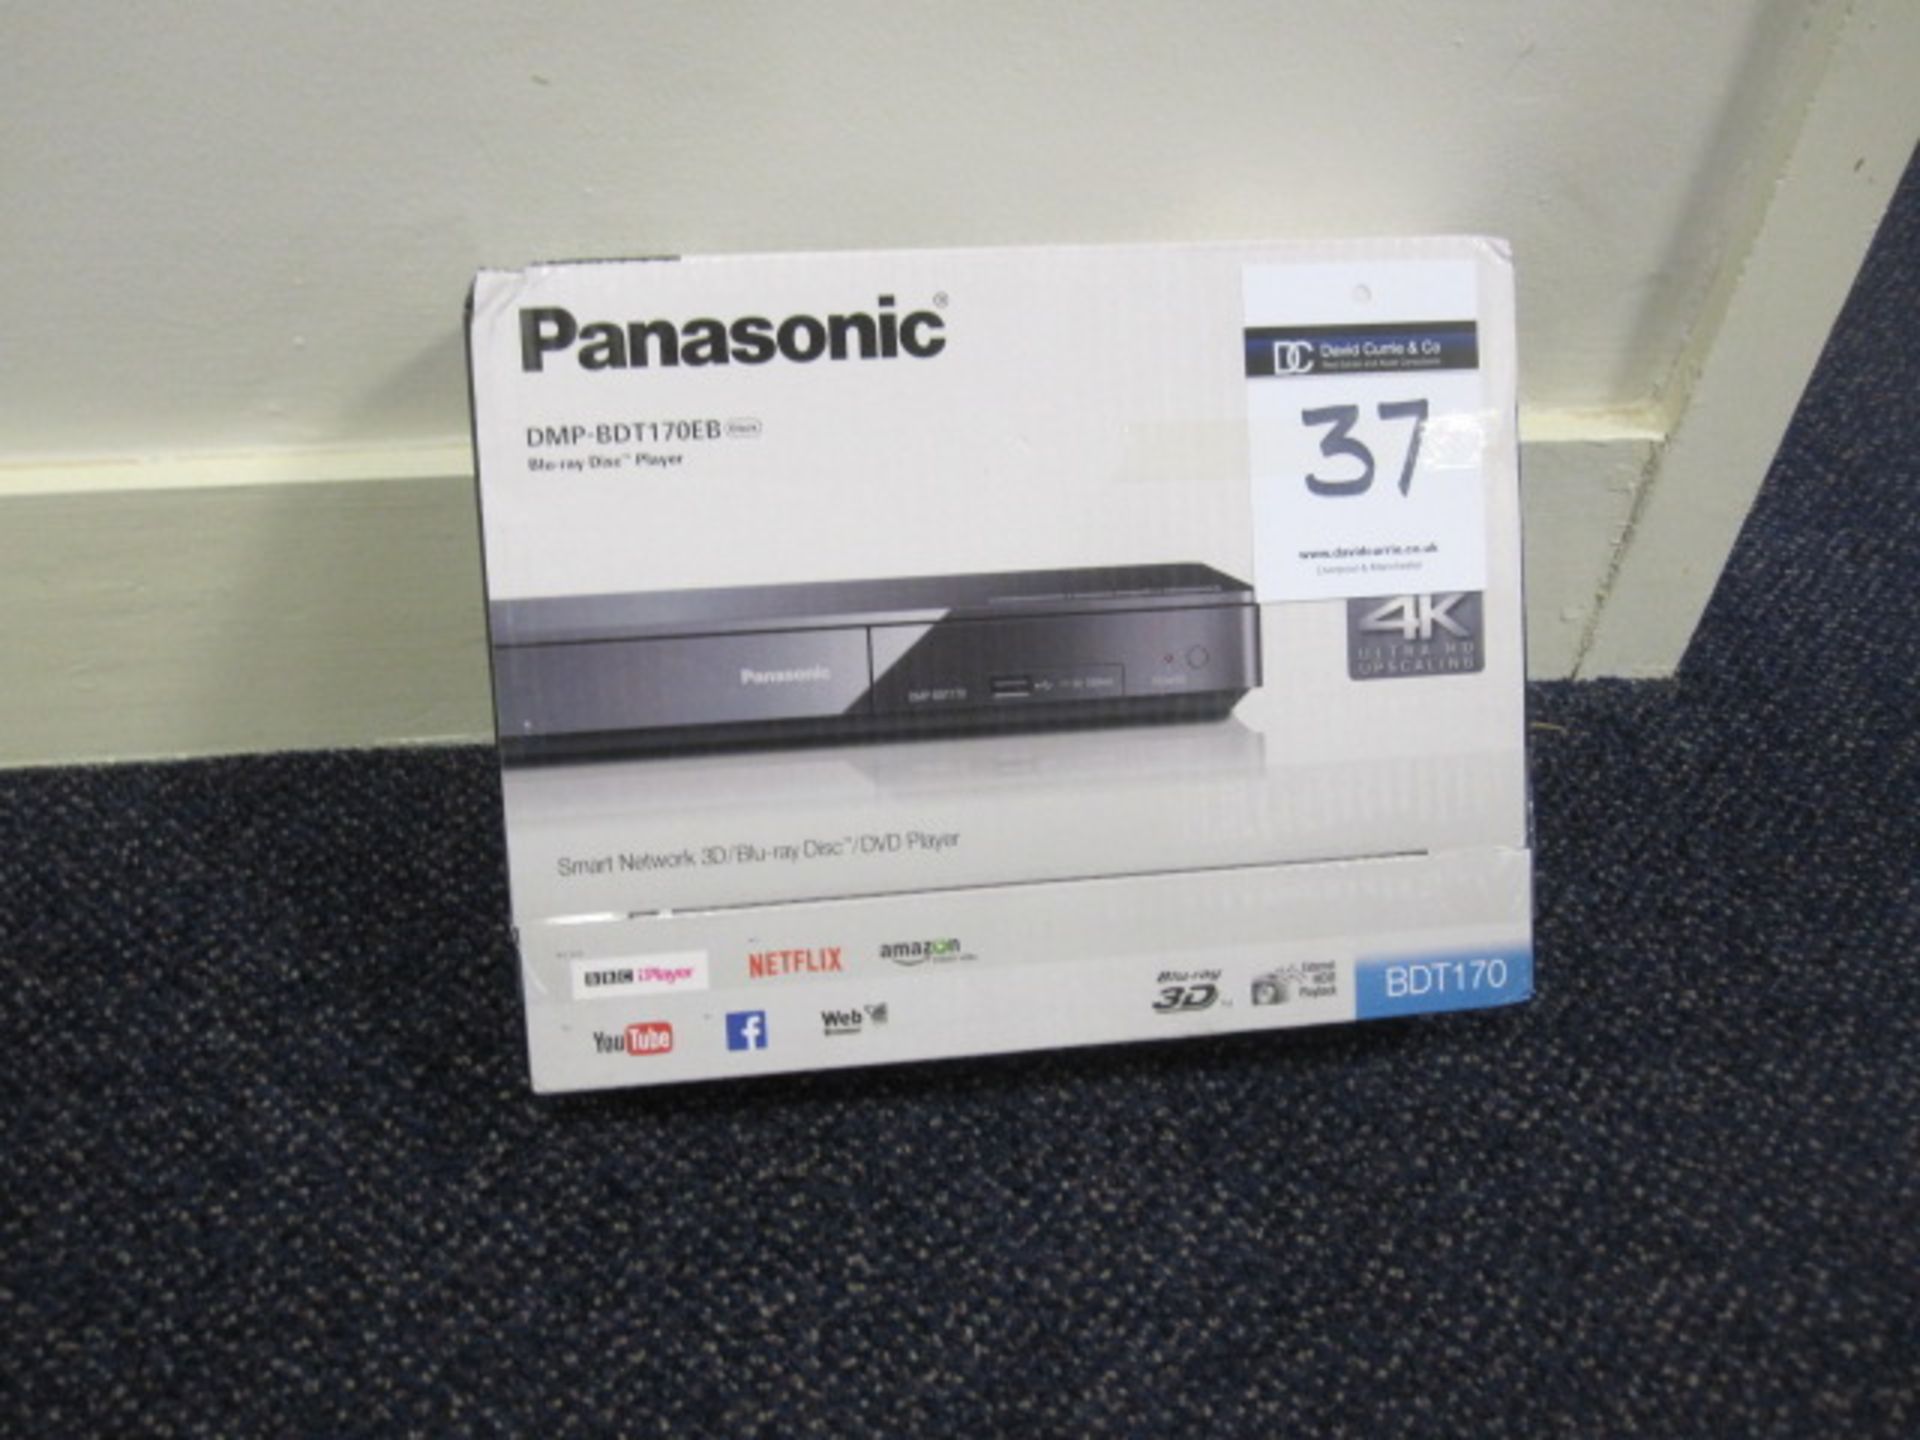 New boxed - Panasonic DMP-BDT170EB Blu-ray Disc player - Image 2 of 2